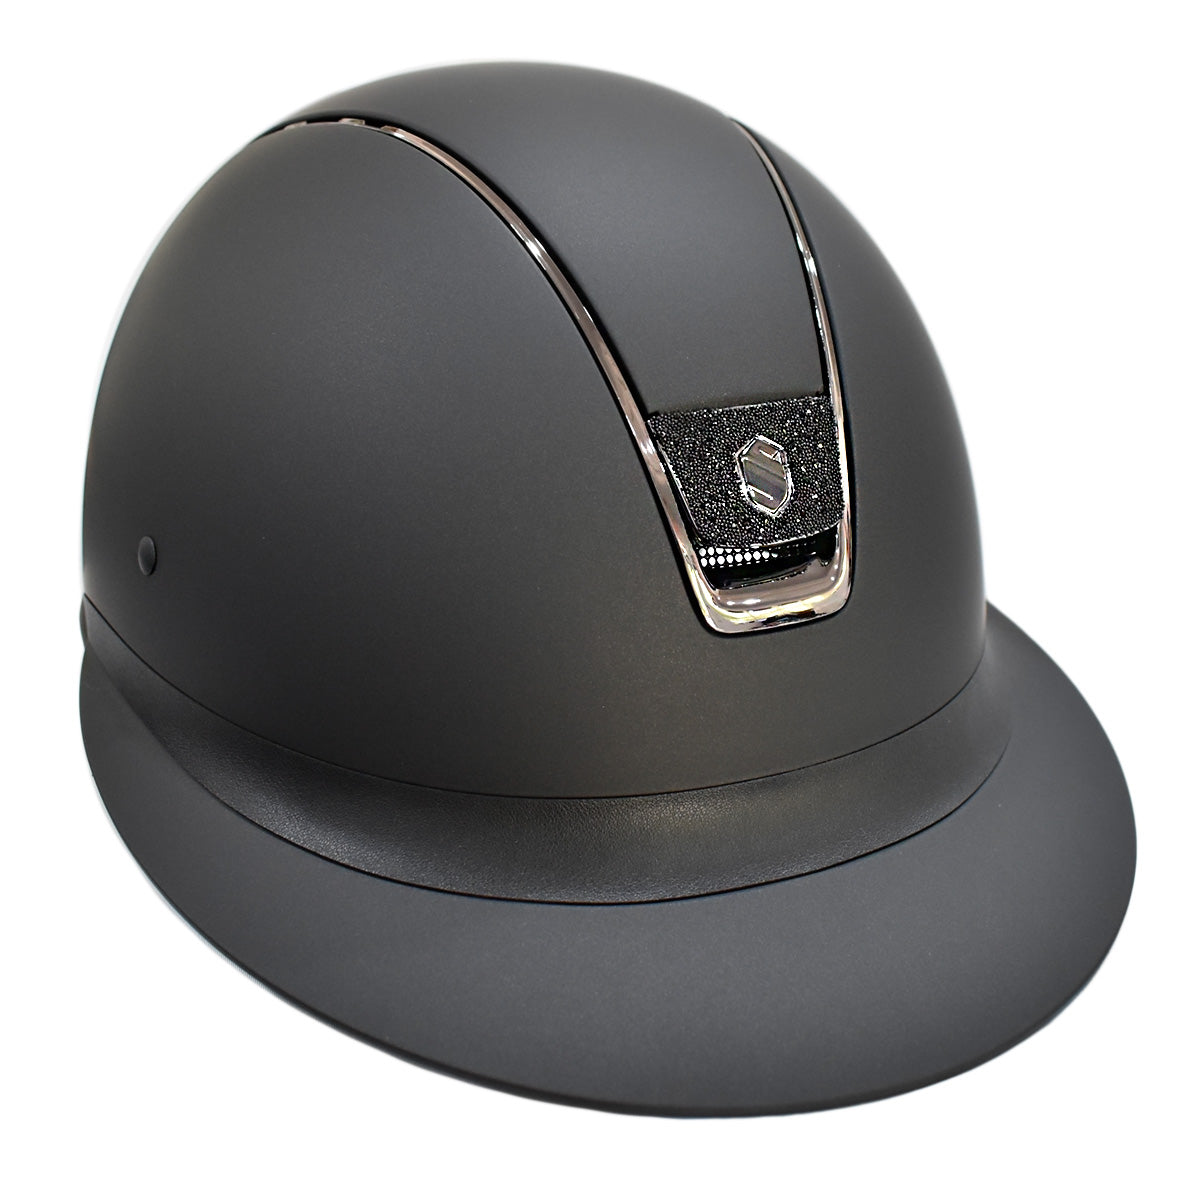 Samshield Custom Miss Shield Matte Black Chrome Black Blazon Crystal Helmet